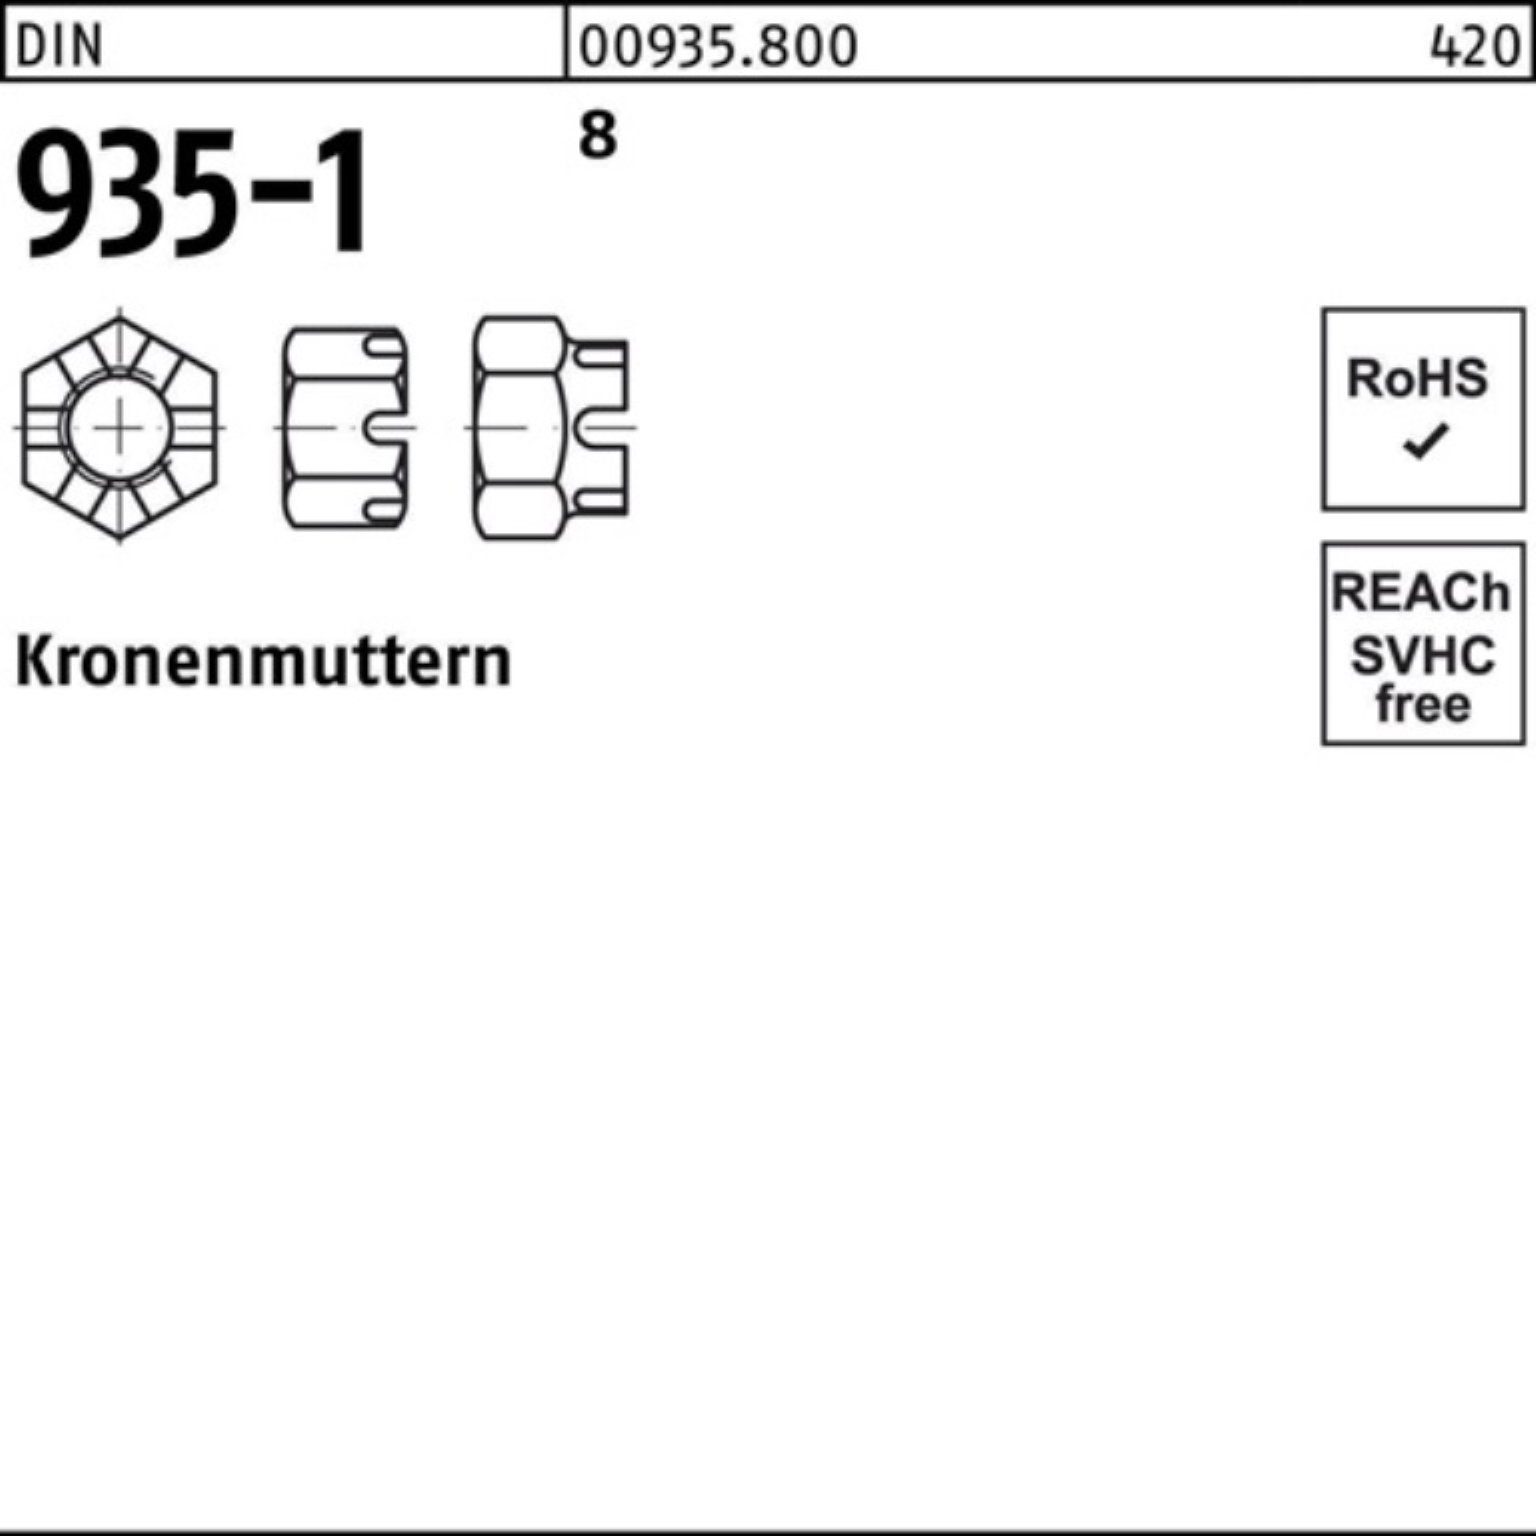 Reyher Kronenmutter 100er Pack 935-1 8 Kronenmutter Kronenmut 8 935-1 M36 DIN 1 DIN Stück